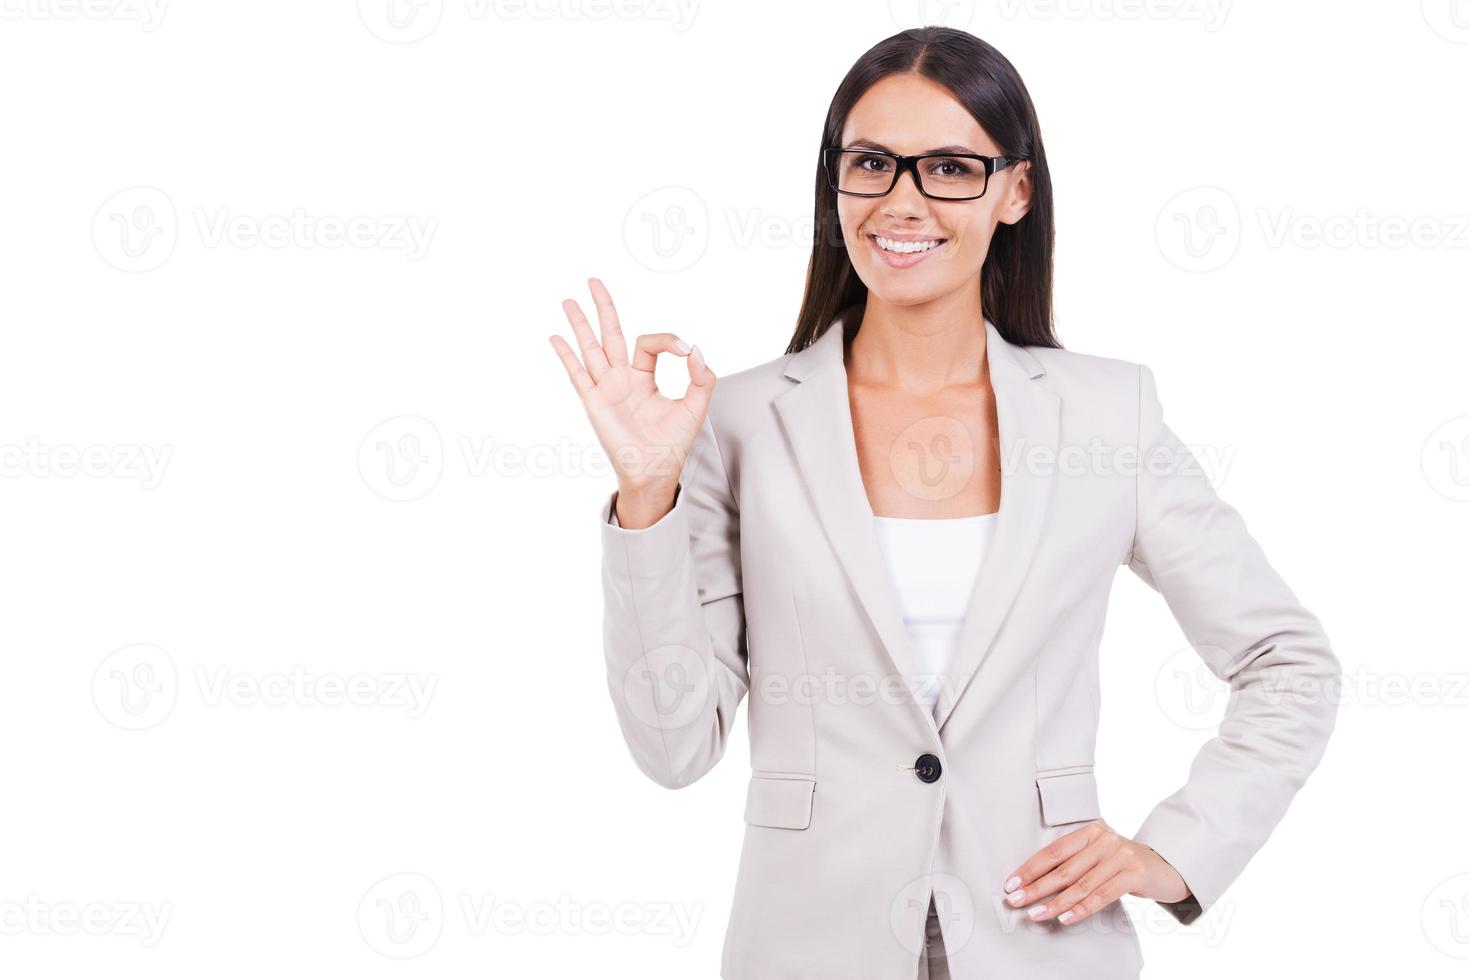 alles is OK. mooi jong zakenvrouw in pak gebaren OK teken en glimlachen terwijl staand tegen wit achtergrond foto